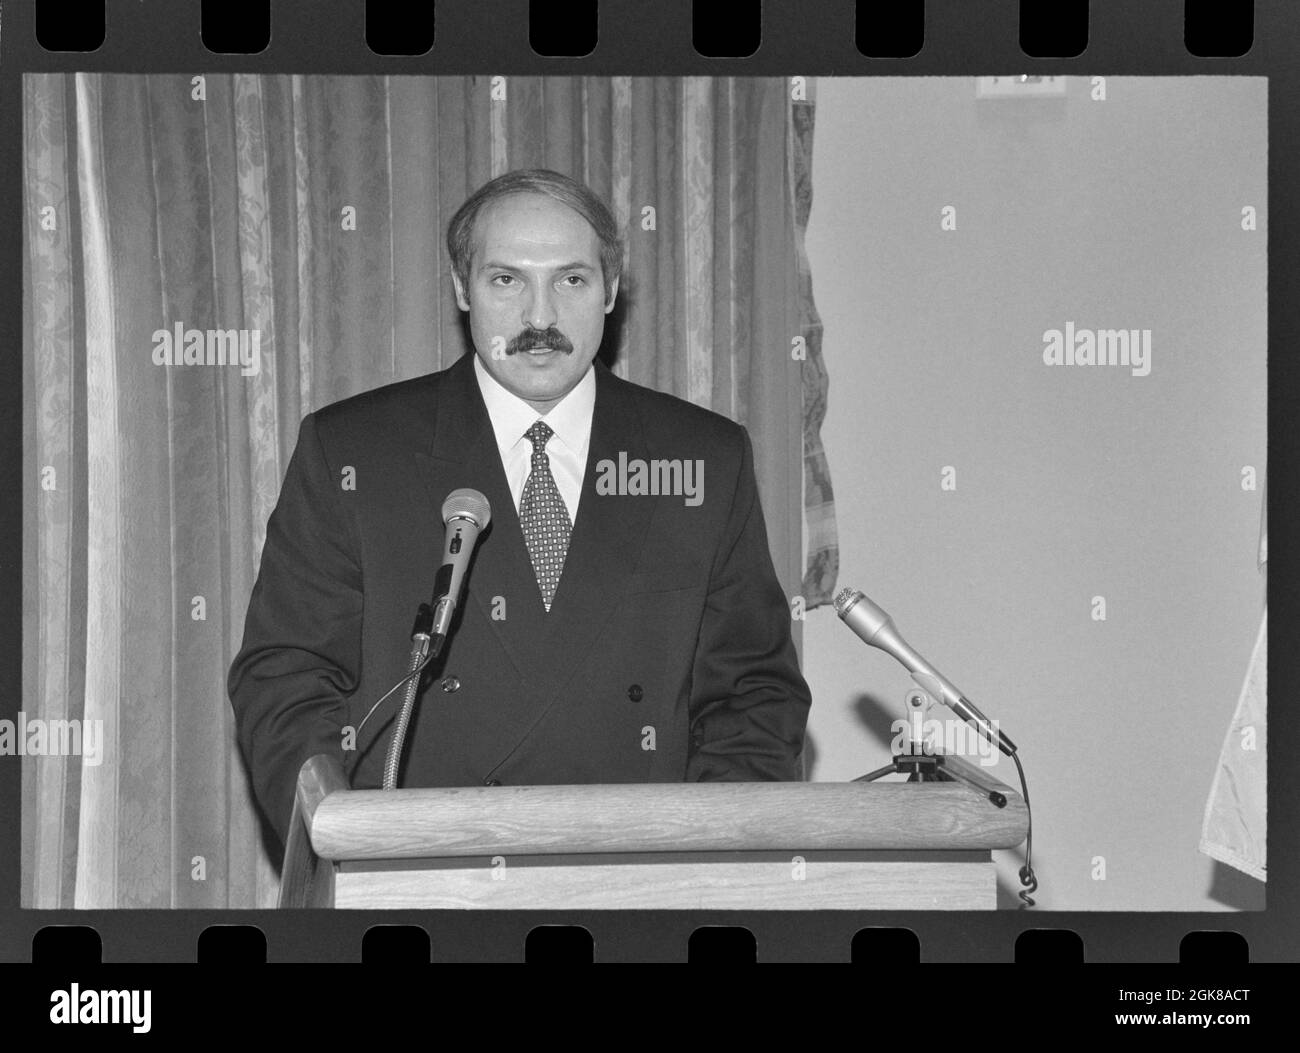 Alexander Lukashenko President of Belarus. Speaking in Chicago,, Illinois.. October 26, 1995. Stock Photo